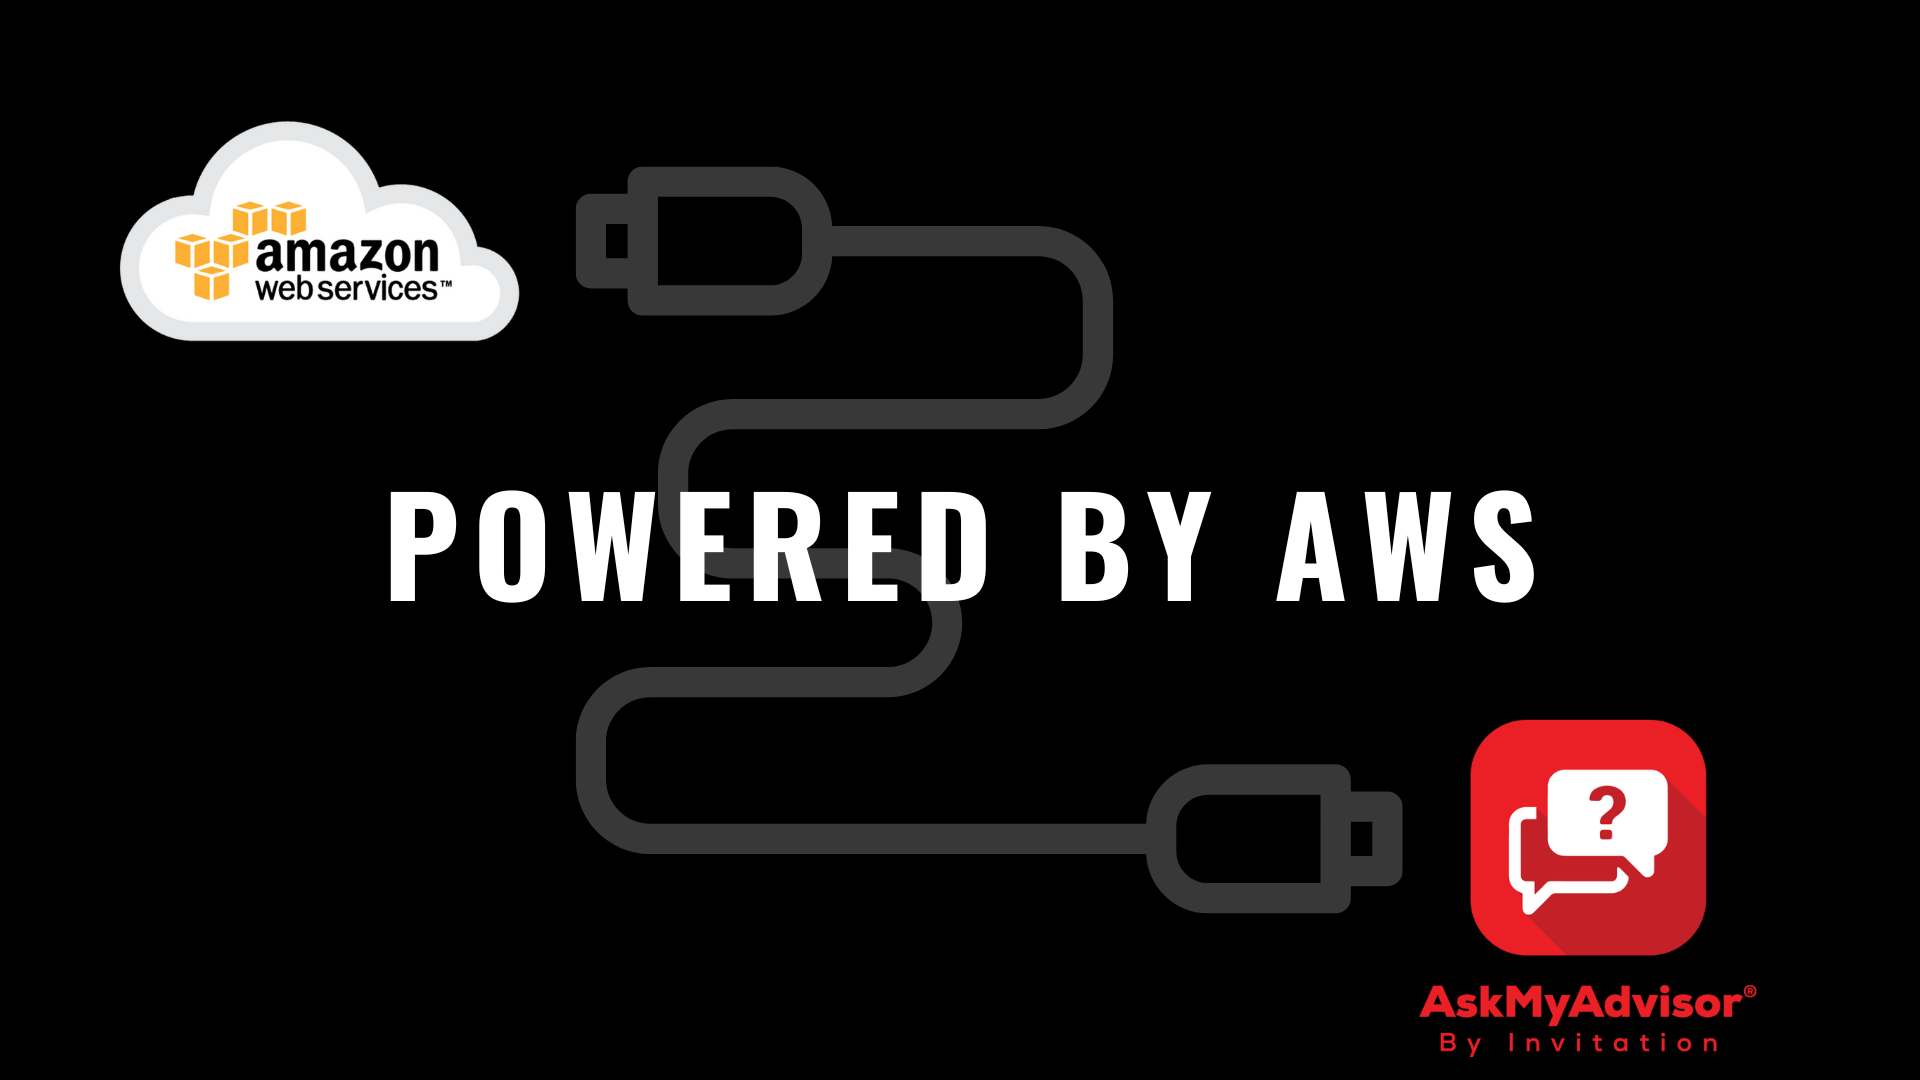 Askmyadvisor powered by aws